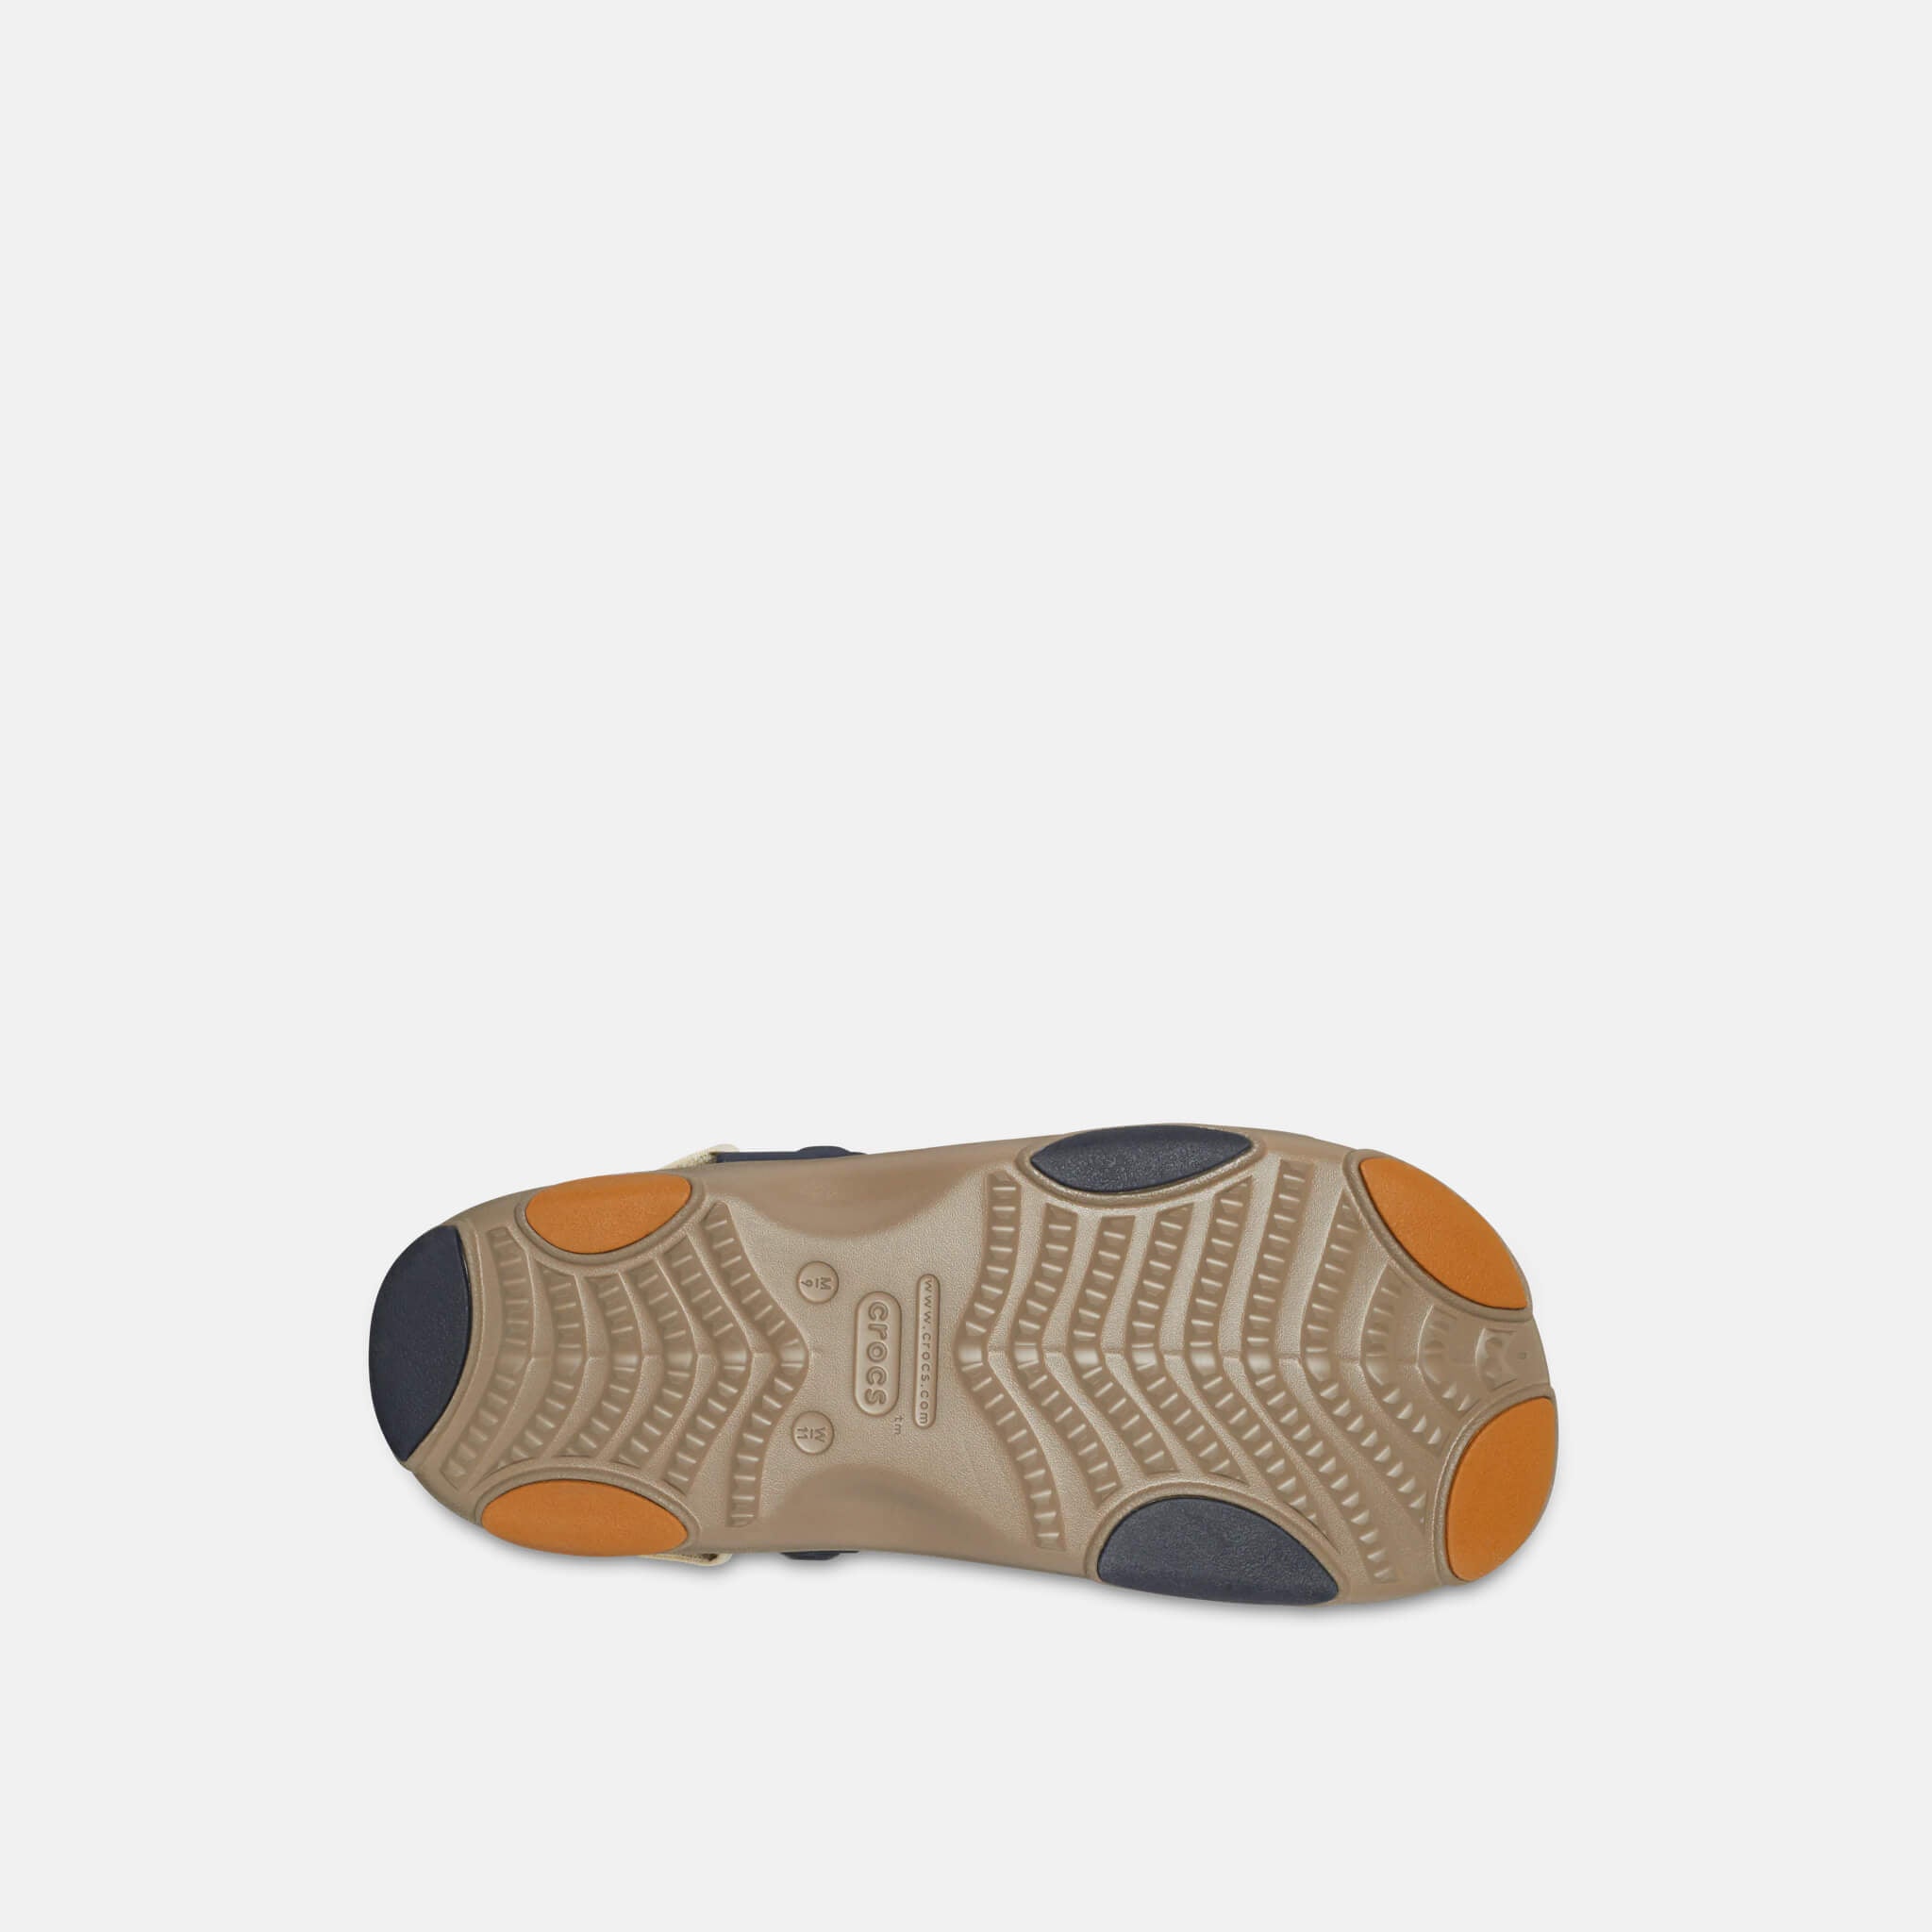 Classic All-Terrain Sandal Khaki/Multi